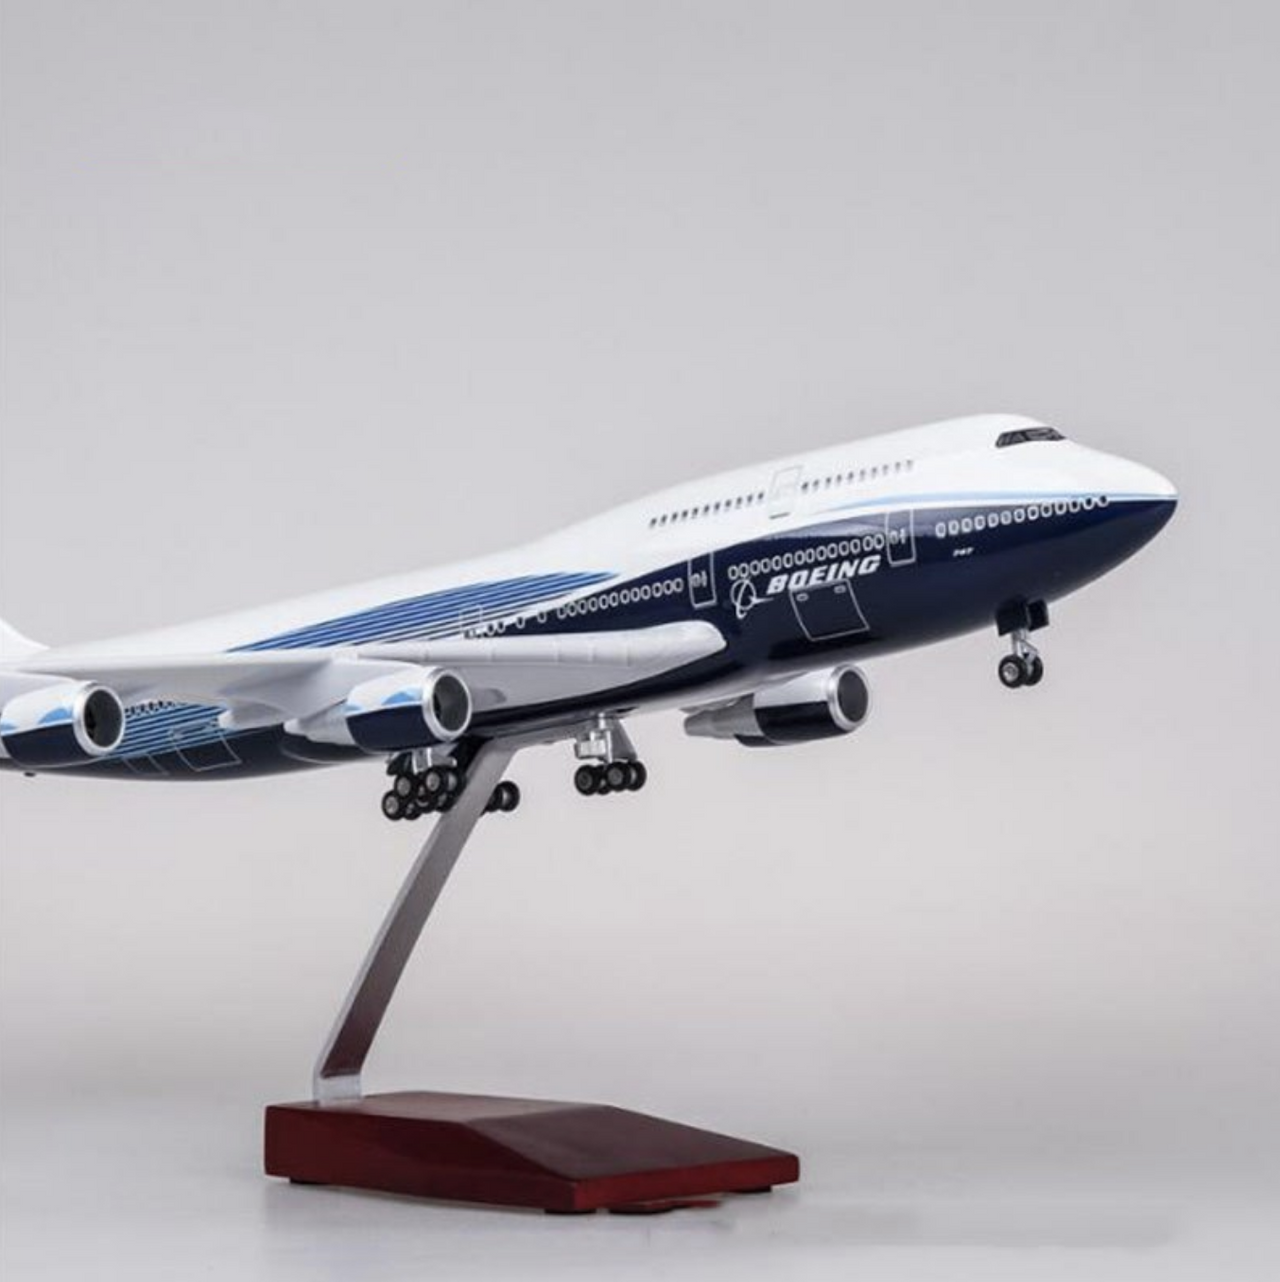 Original Livery Boeing 747 Airplane Model (1/160 Scale - 47CM)